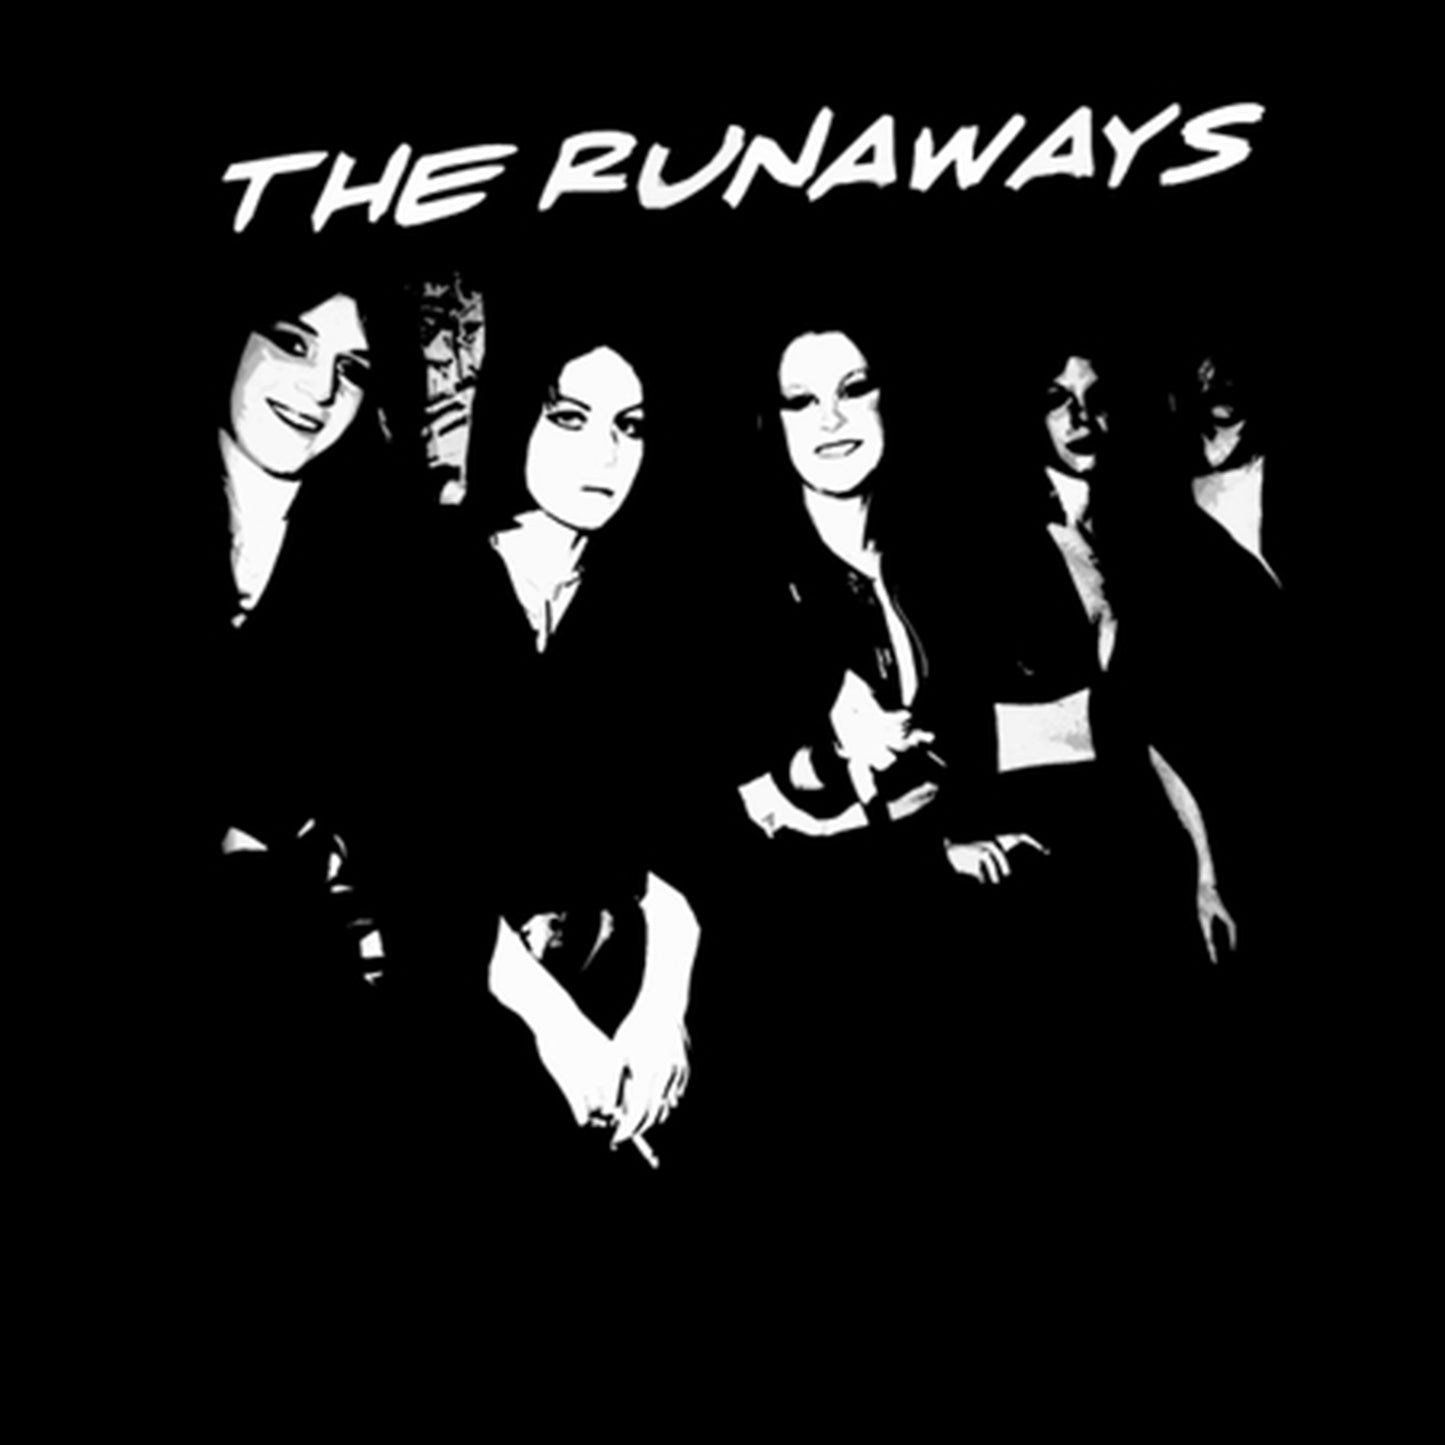 Joan Jett and The Runaways T-Shirt - b/w